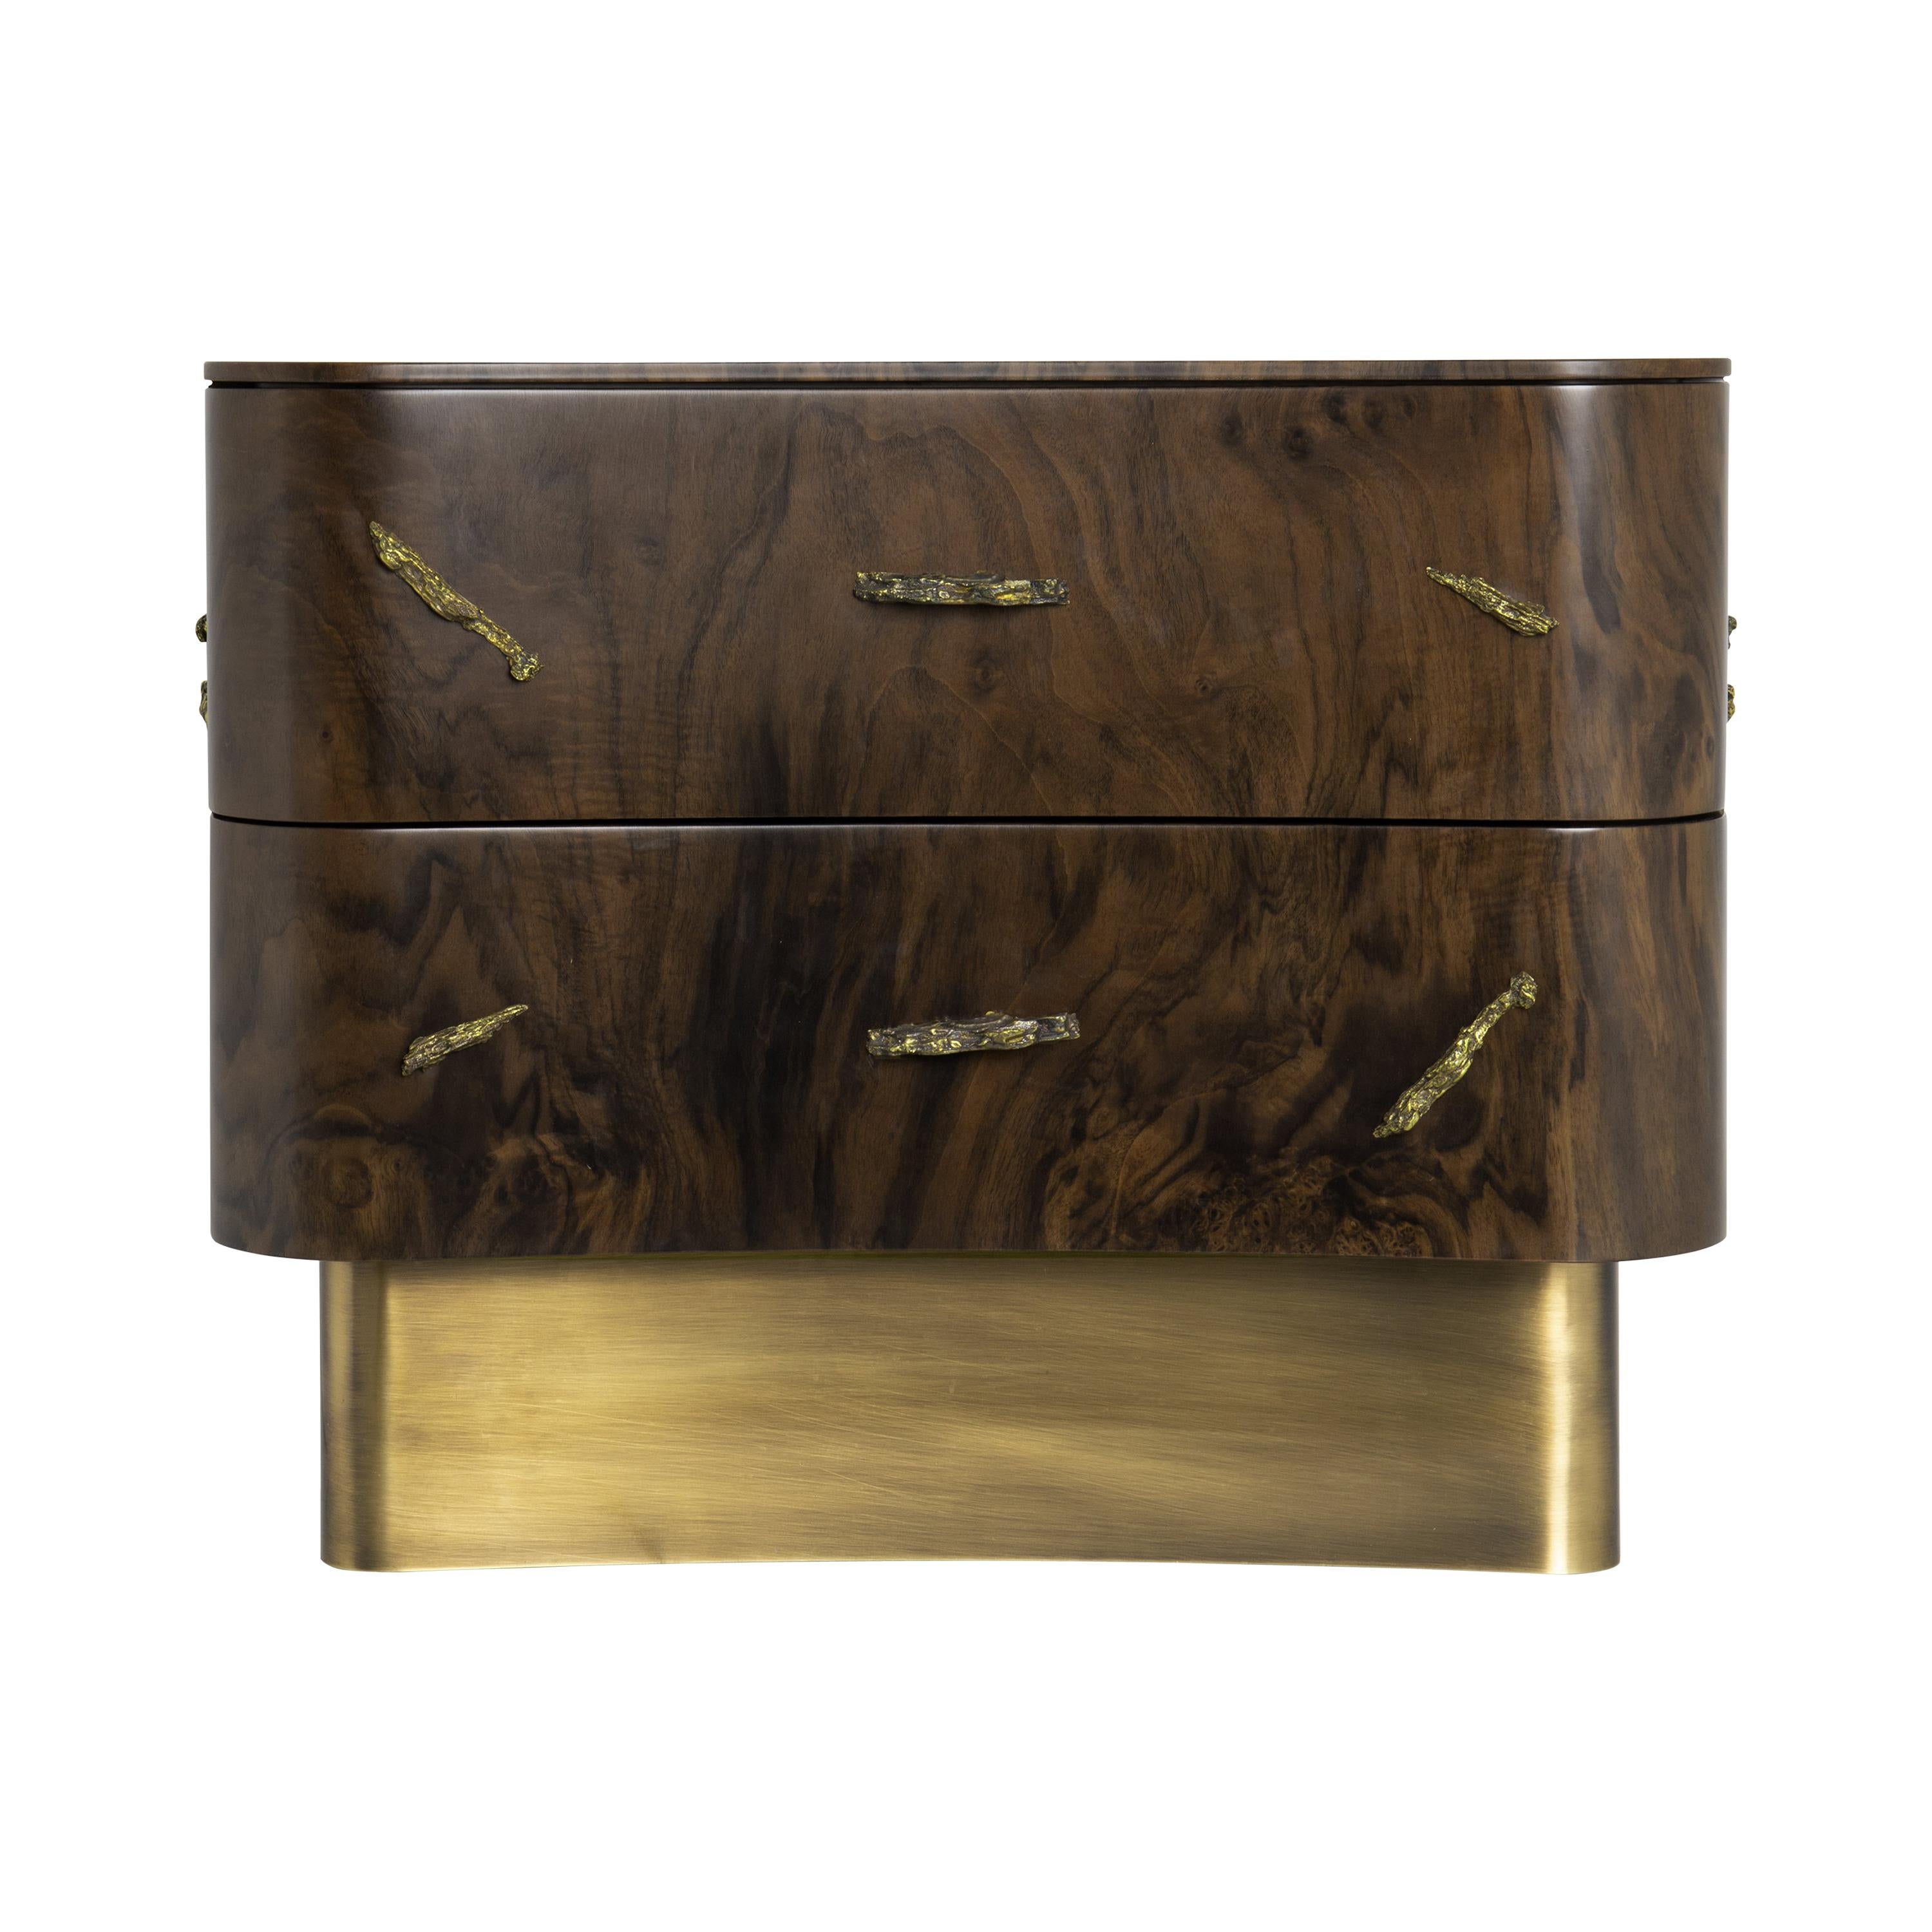 Baraka Bedside Table in Aged Brushed Brass and Casted Brass Details For Sale